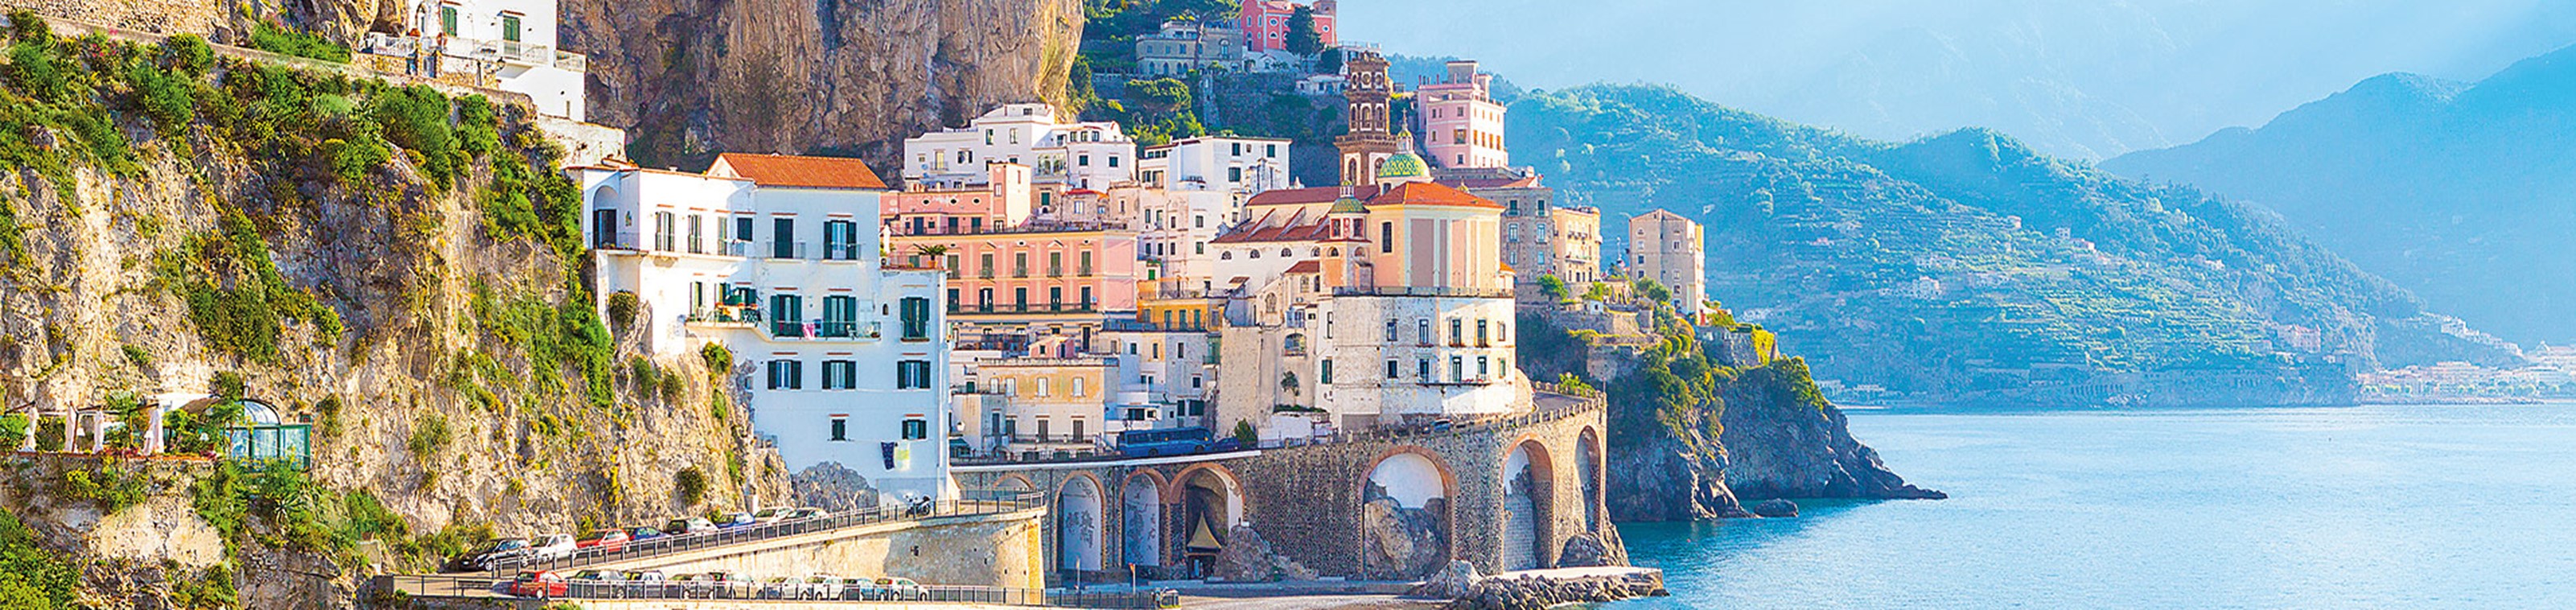 Cruise van Rome tot Dubrovnik met EUROPA 2 Hapag-Lloyd Cruises